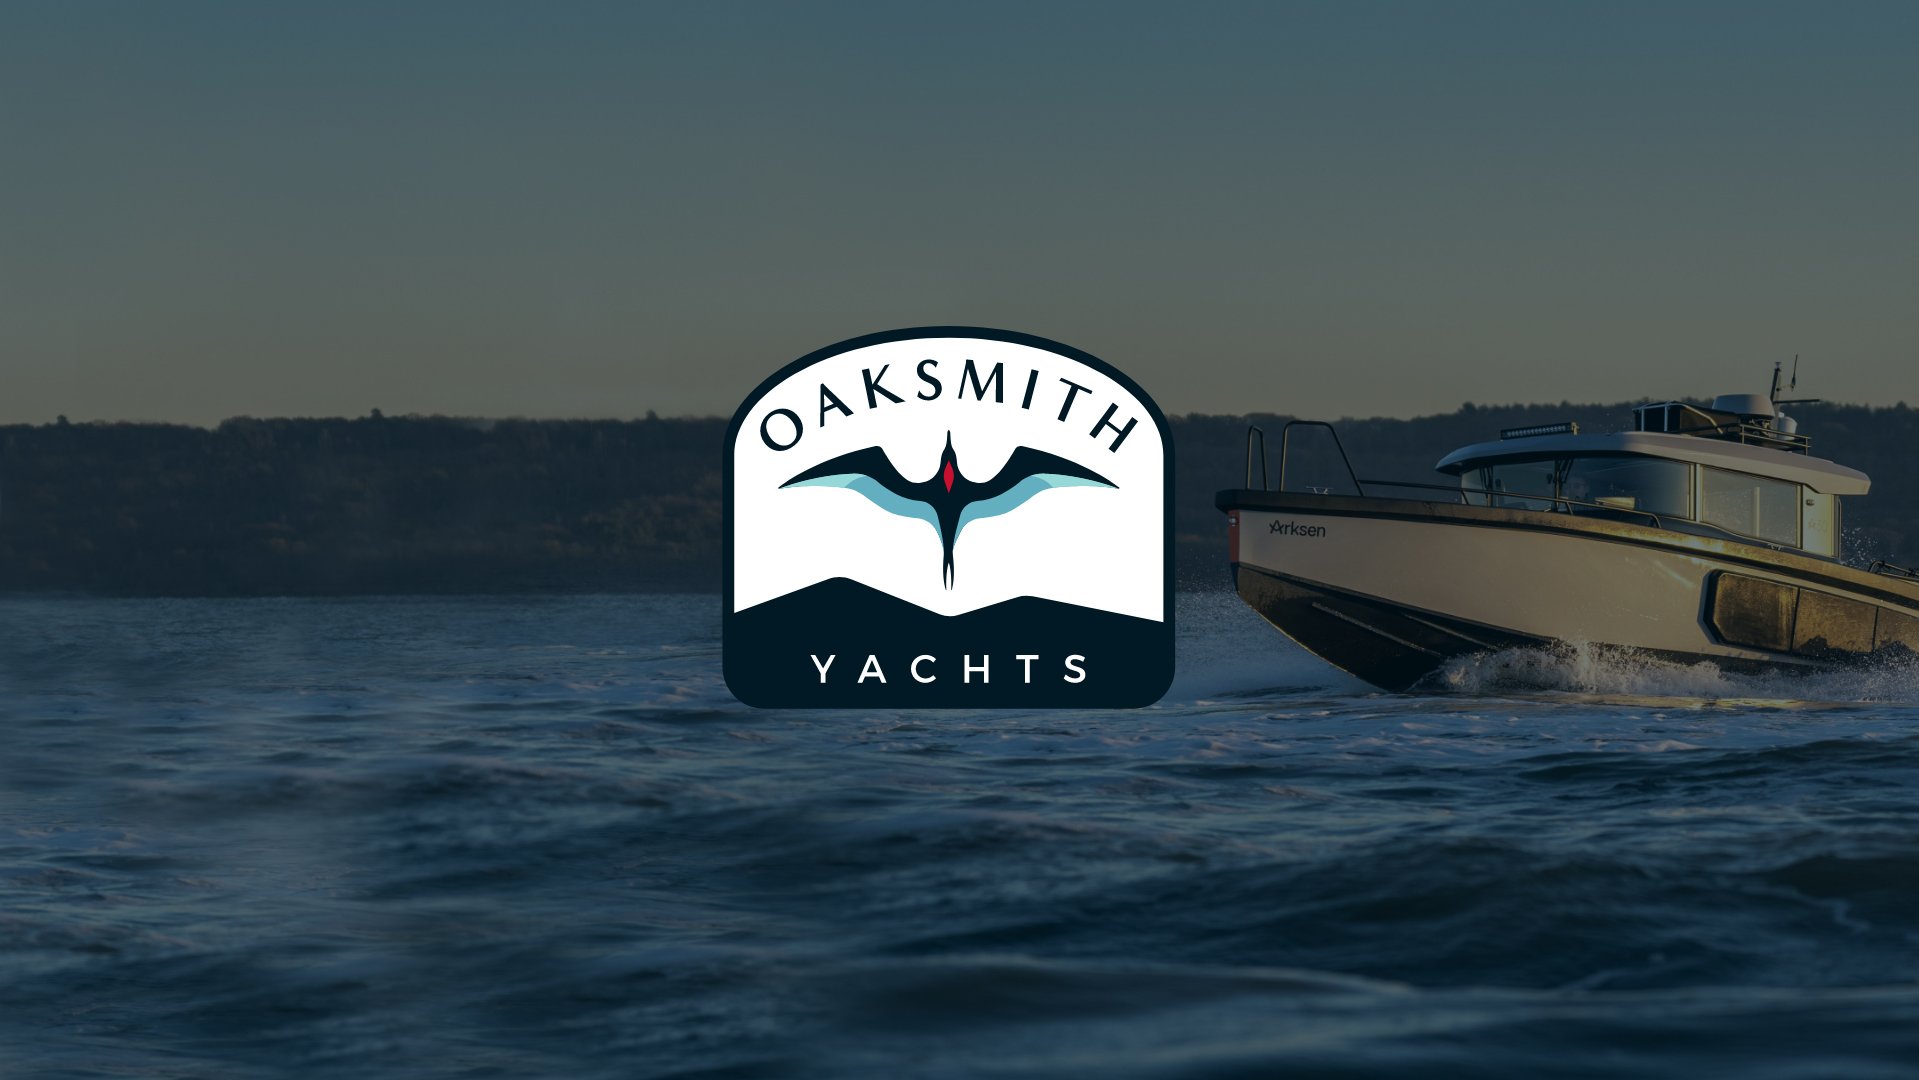 oaksmith yachts seattle